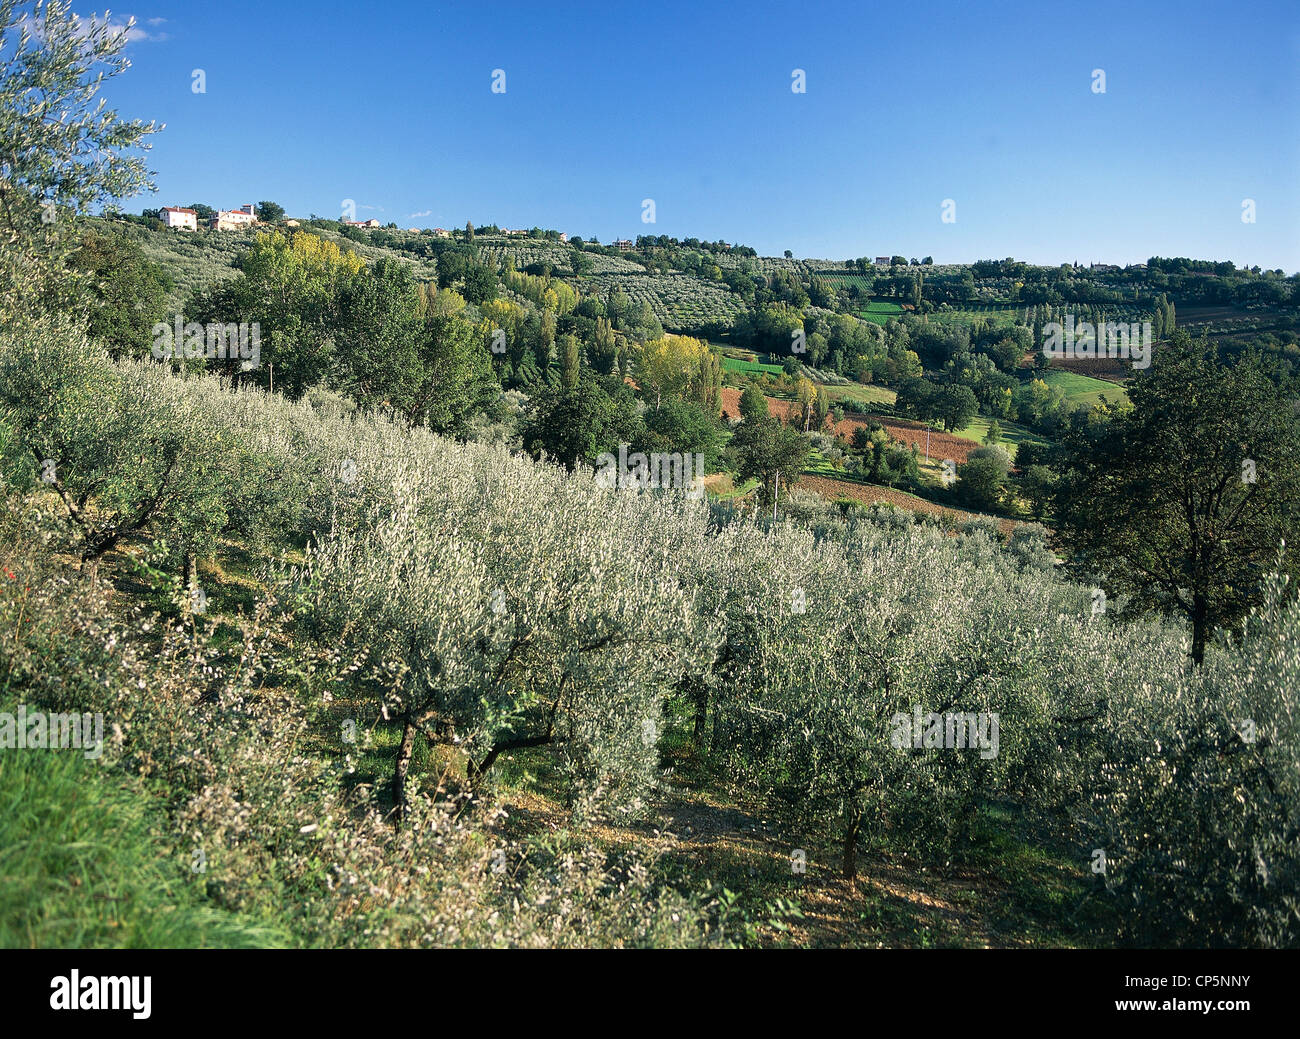 Italy - Umbria Region - Montefalco - Olive tree Stock Photo